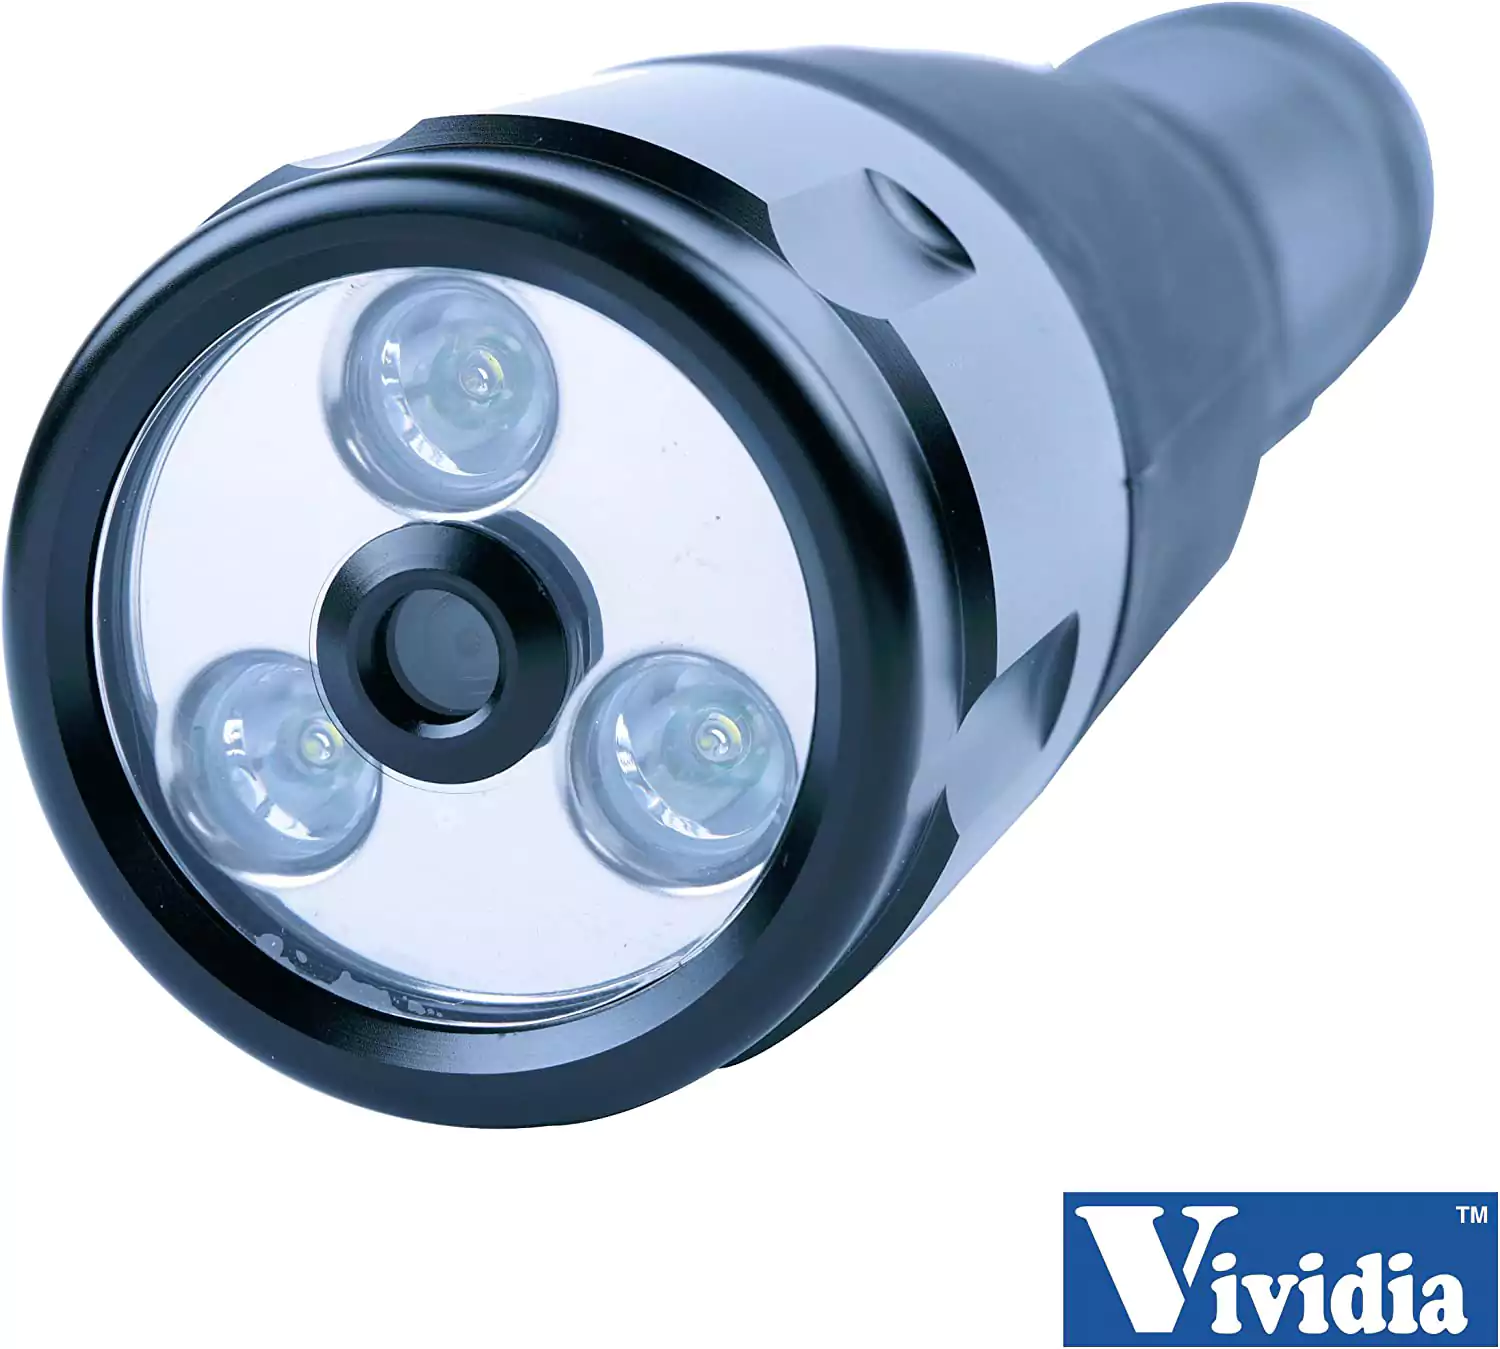 Action Camera Flashlight, Vividia Waterproof LED Flashlight